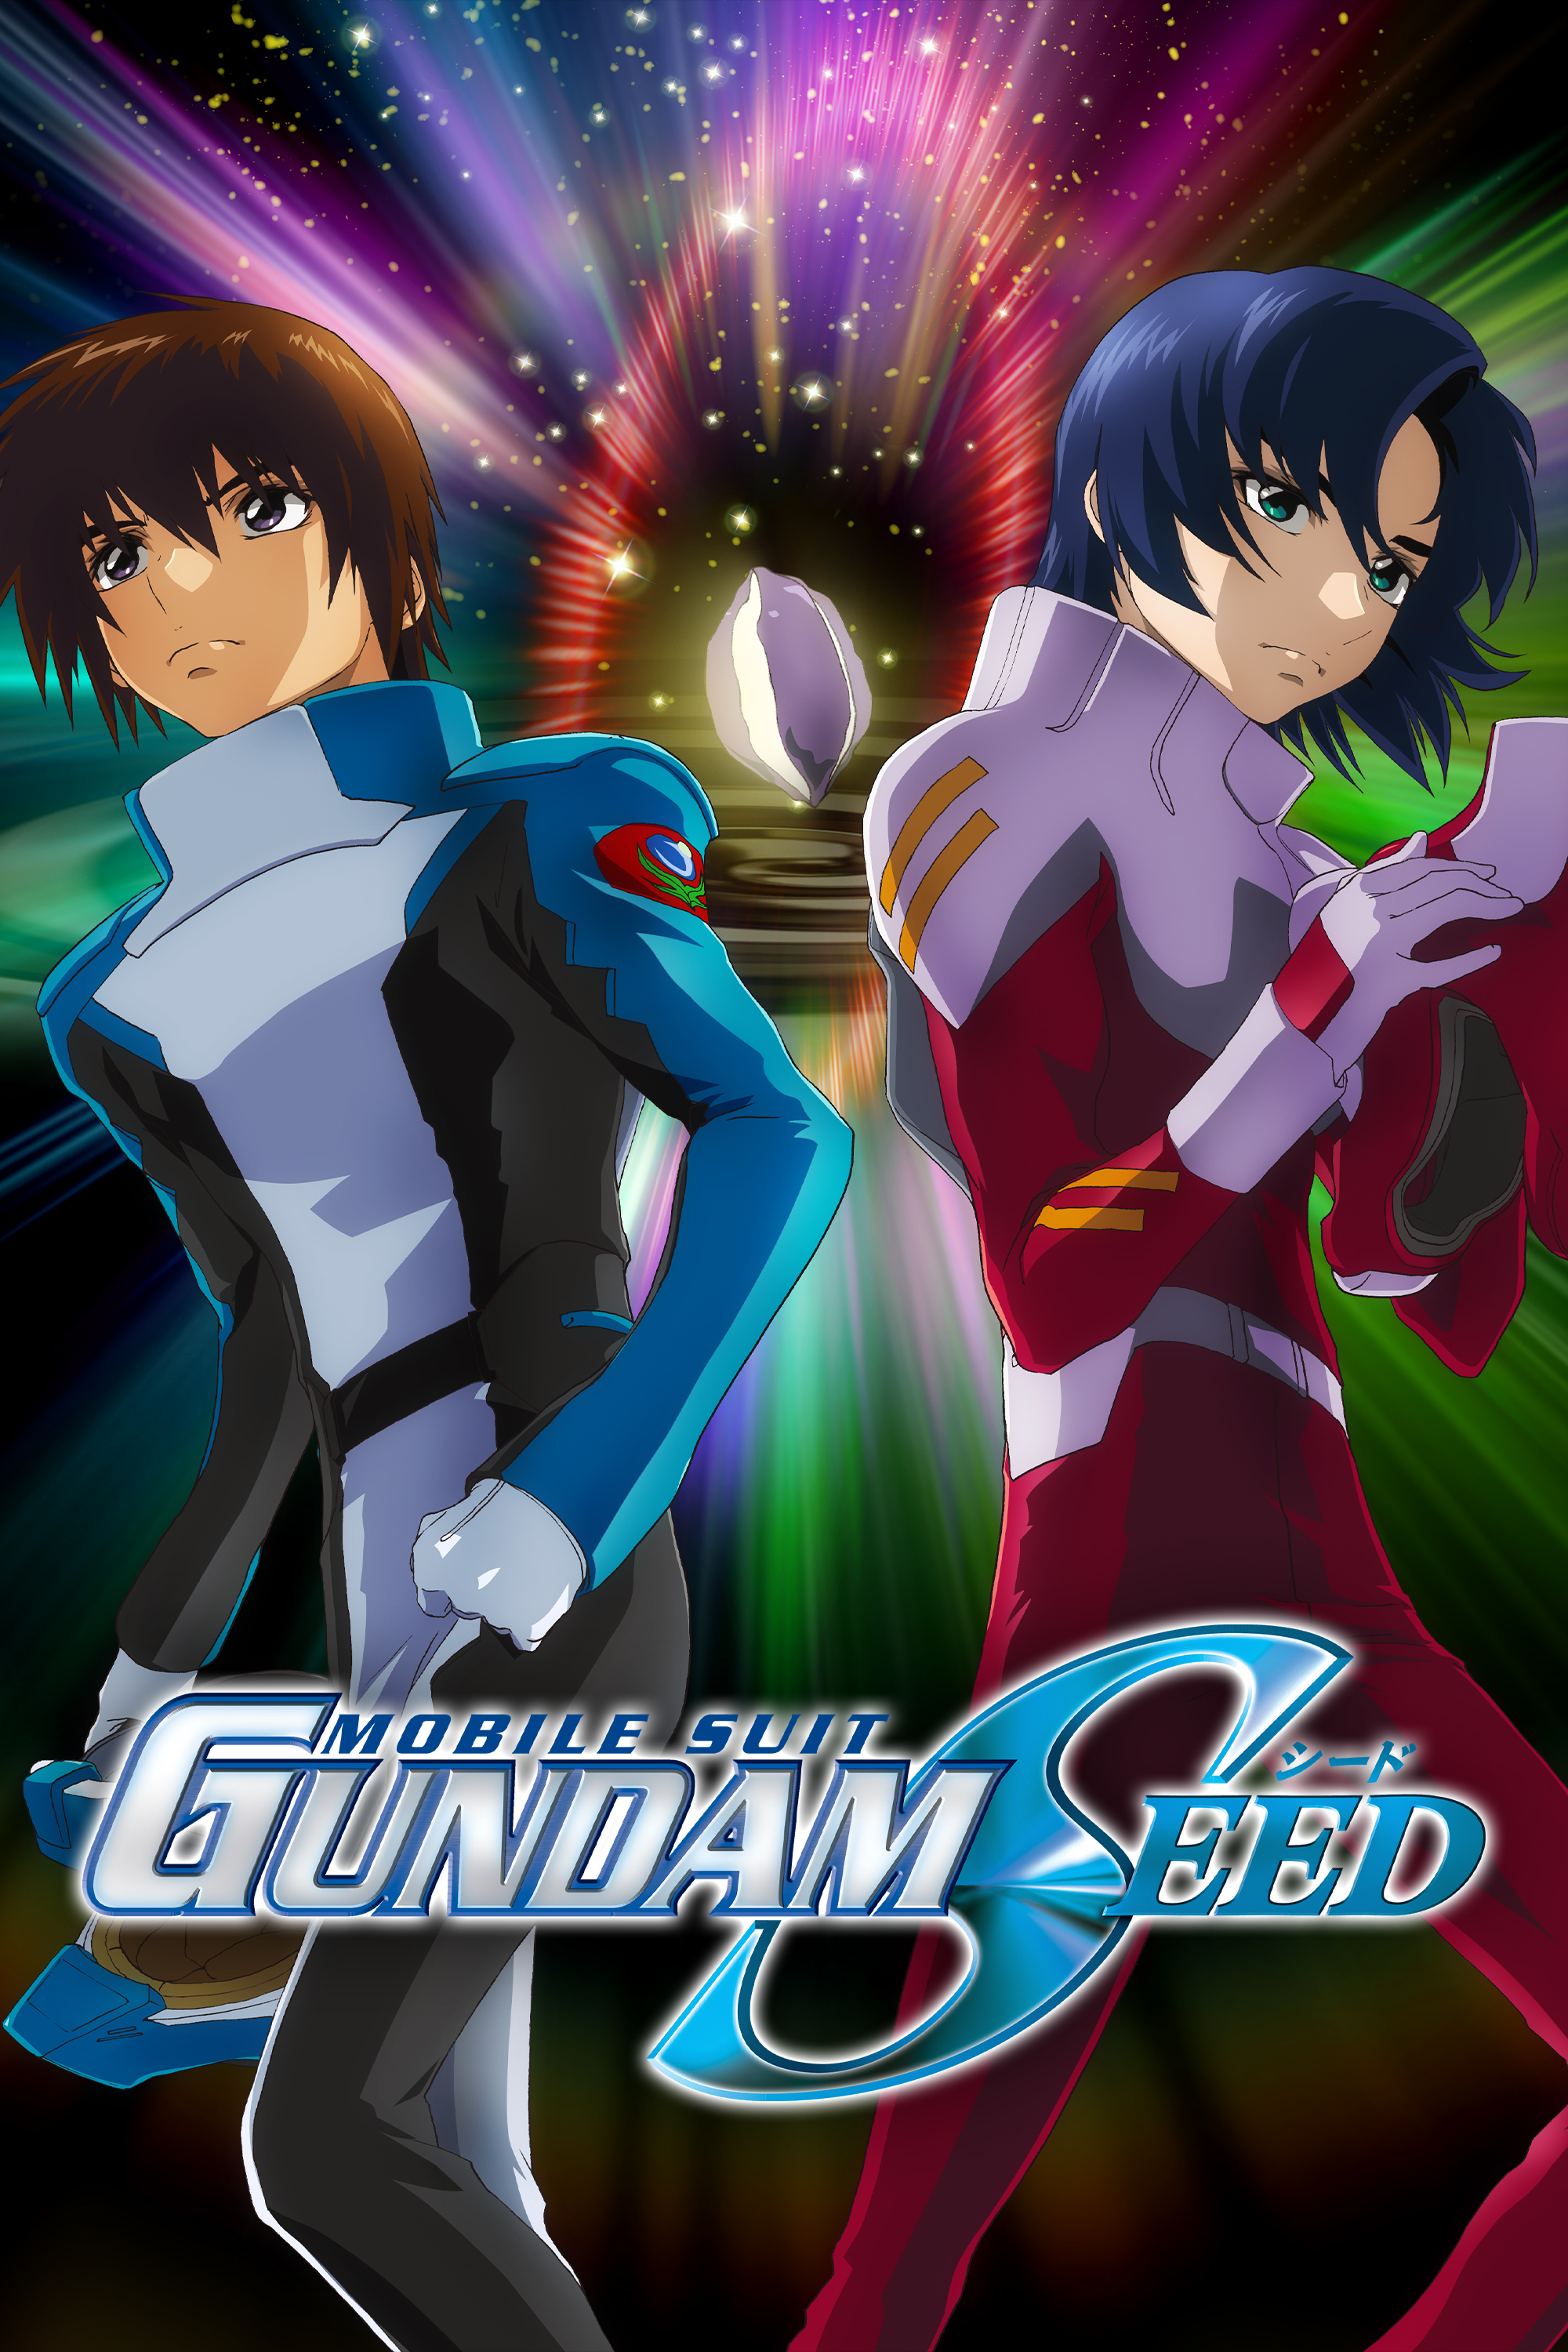 Watch Mobile Suit Gundam Seed Sub Dub Action Adventure Drama Anime Funimation